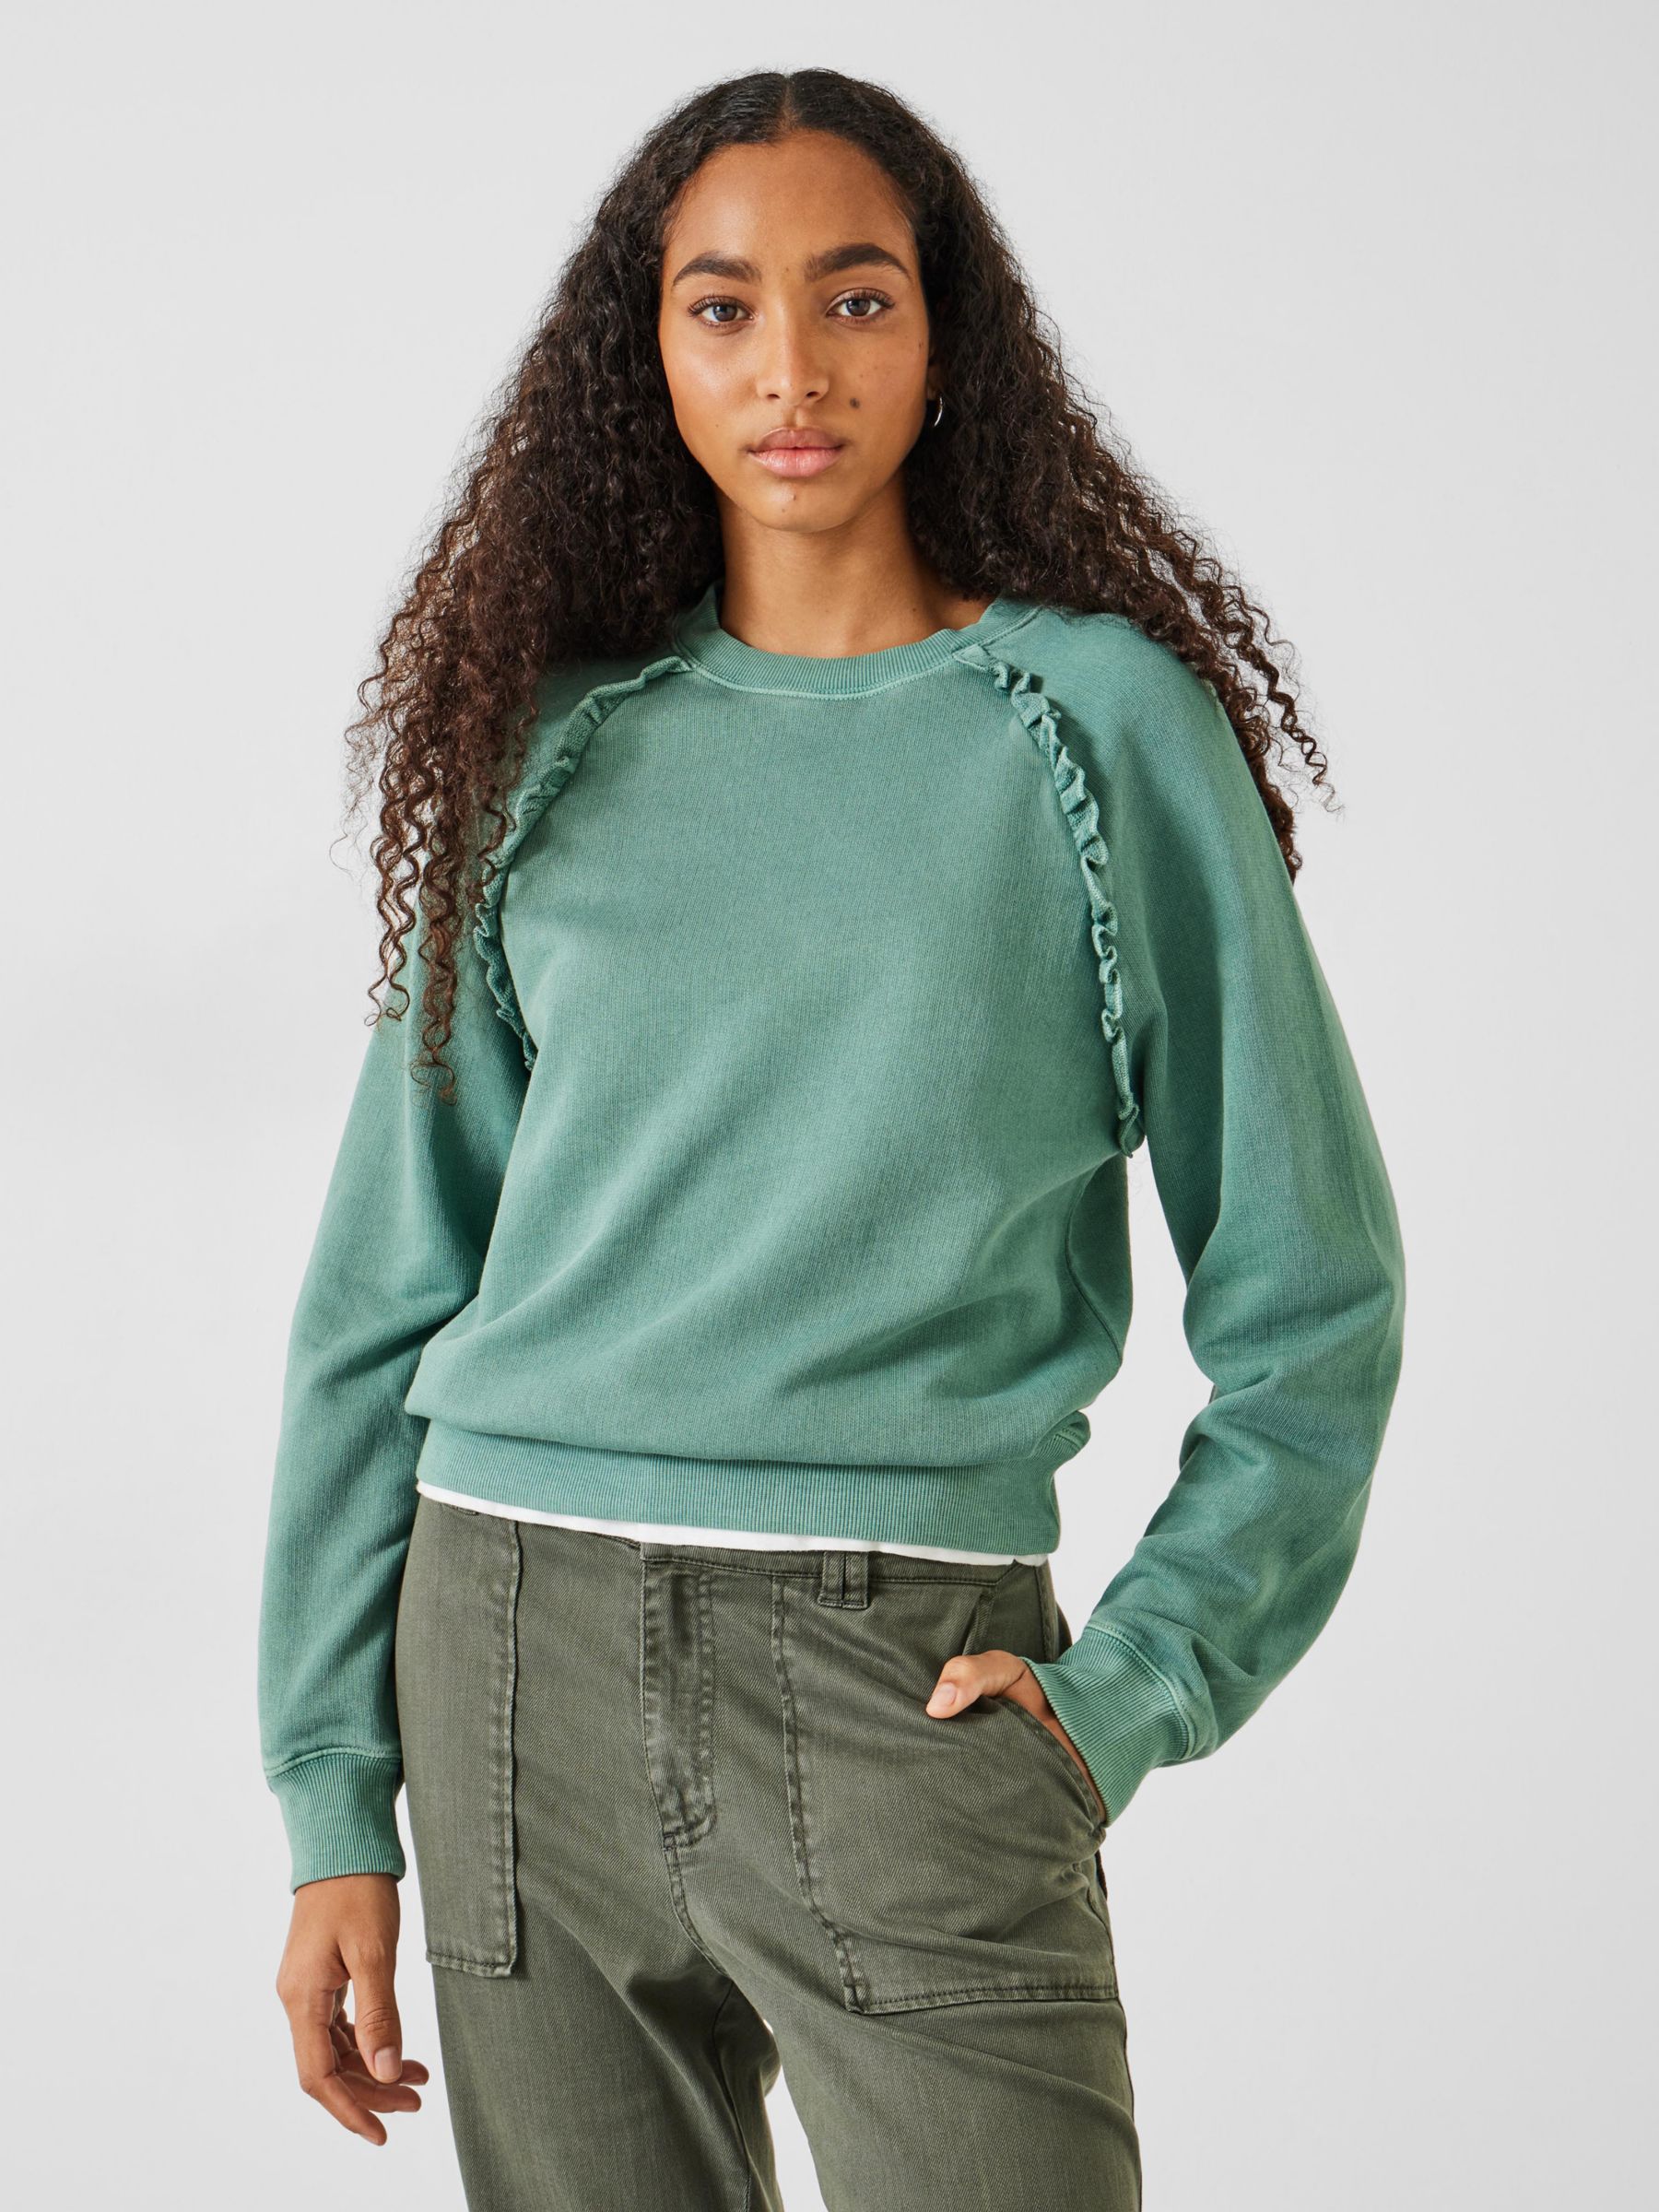 Womens Sweatshirts – Vegan Outfitters